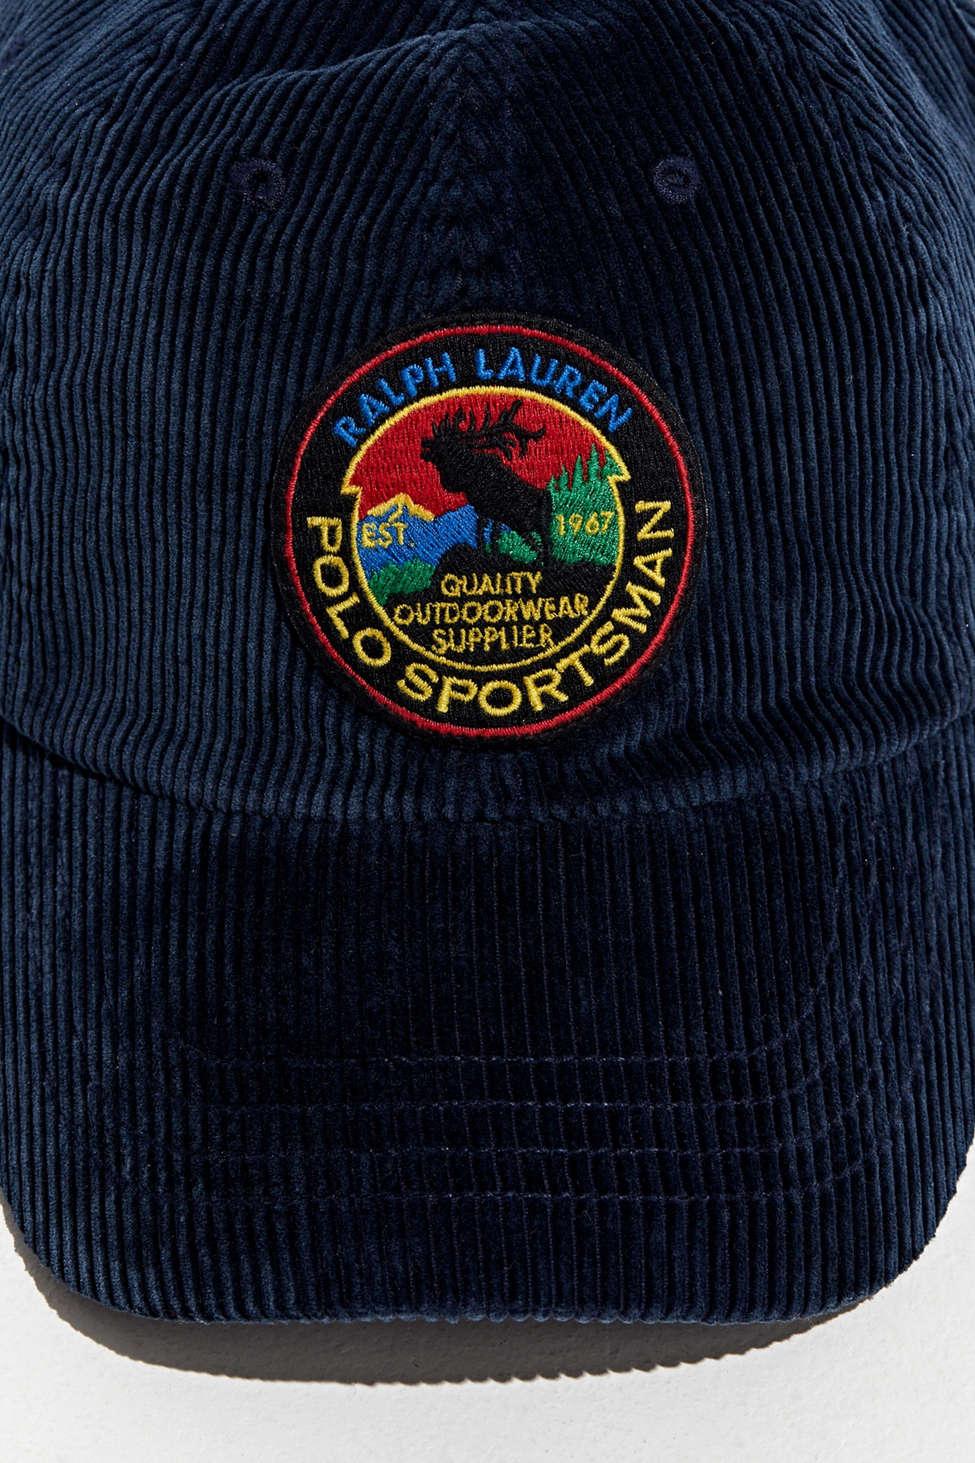 Polo Ralph Lauren Sportsman Corduroy Baseball Hat in Blue for Men - Lyst